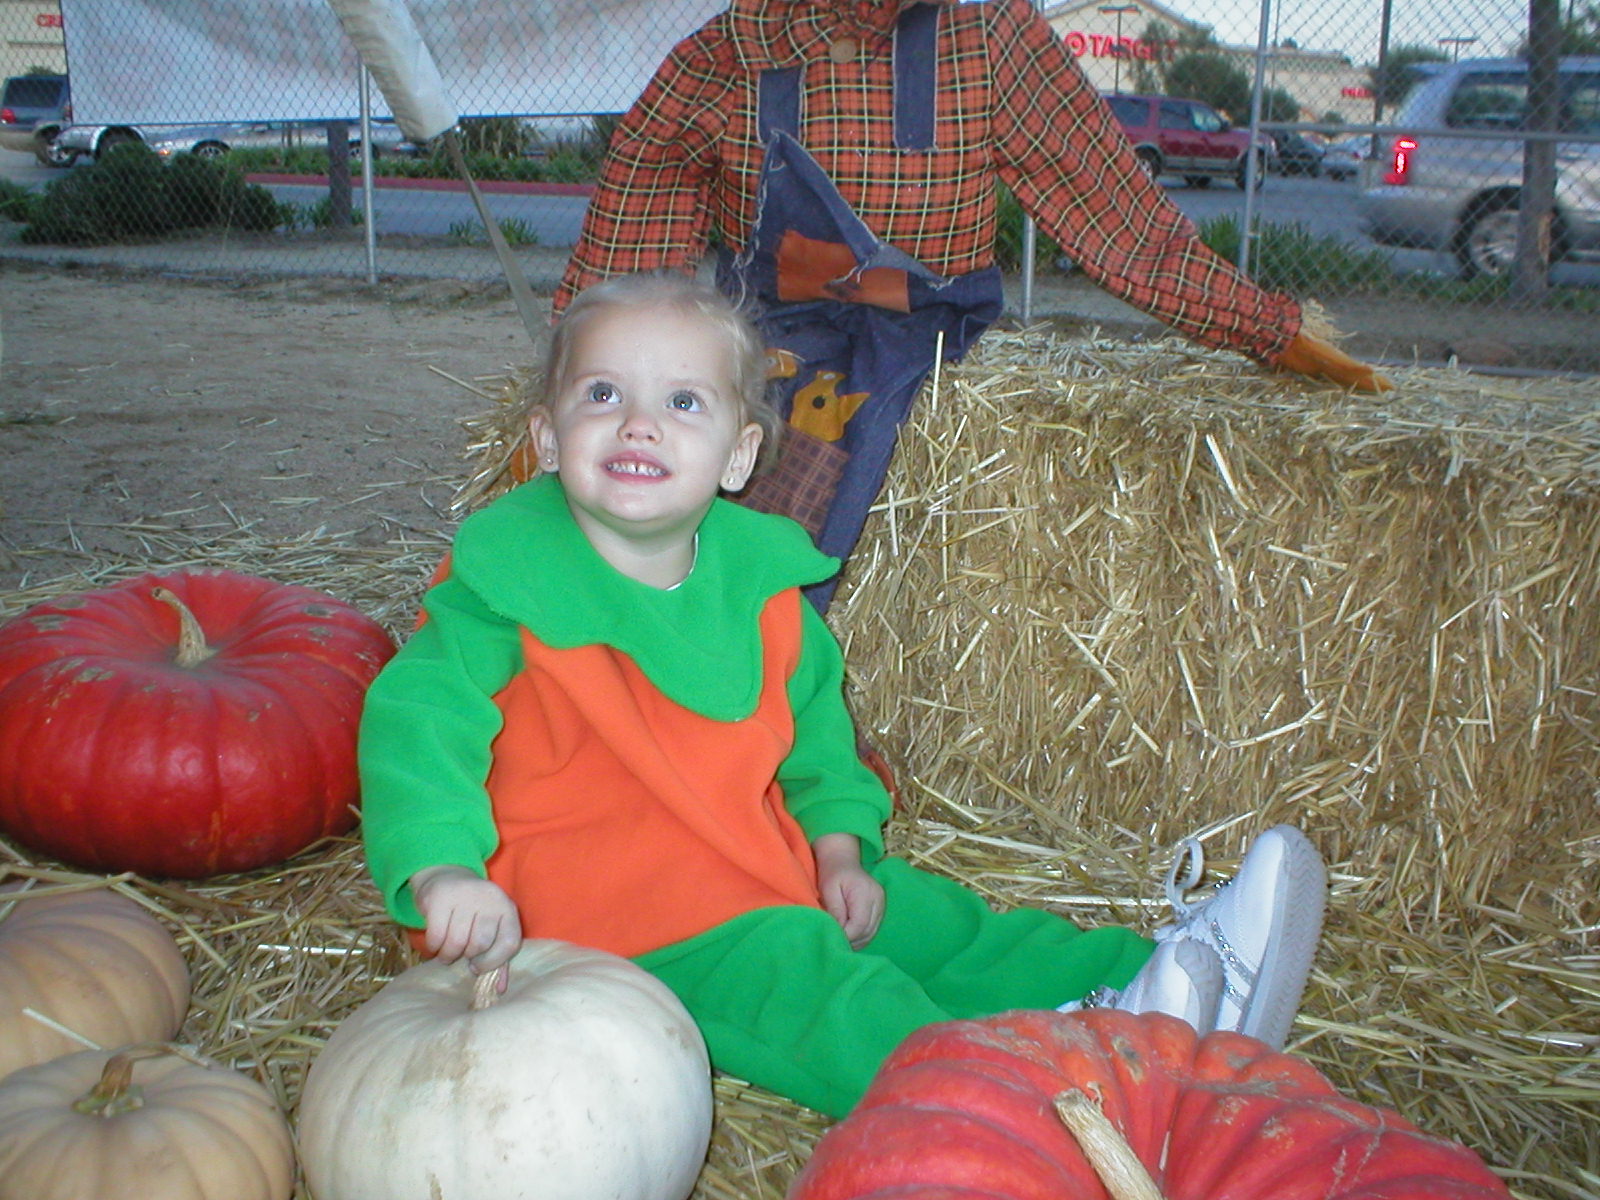 At the "Pumpkin Park"